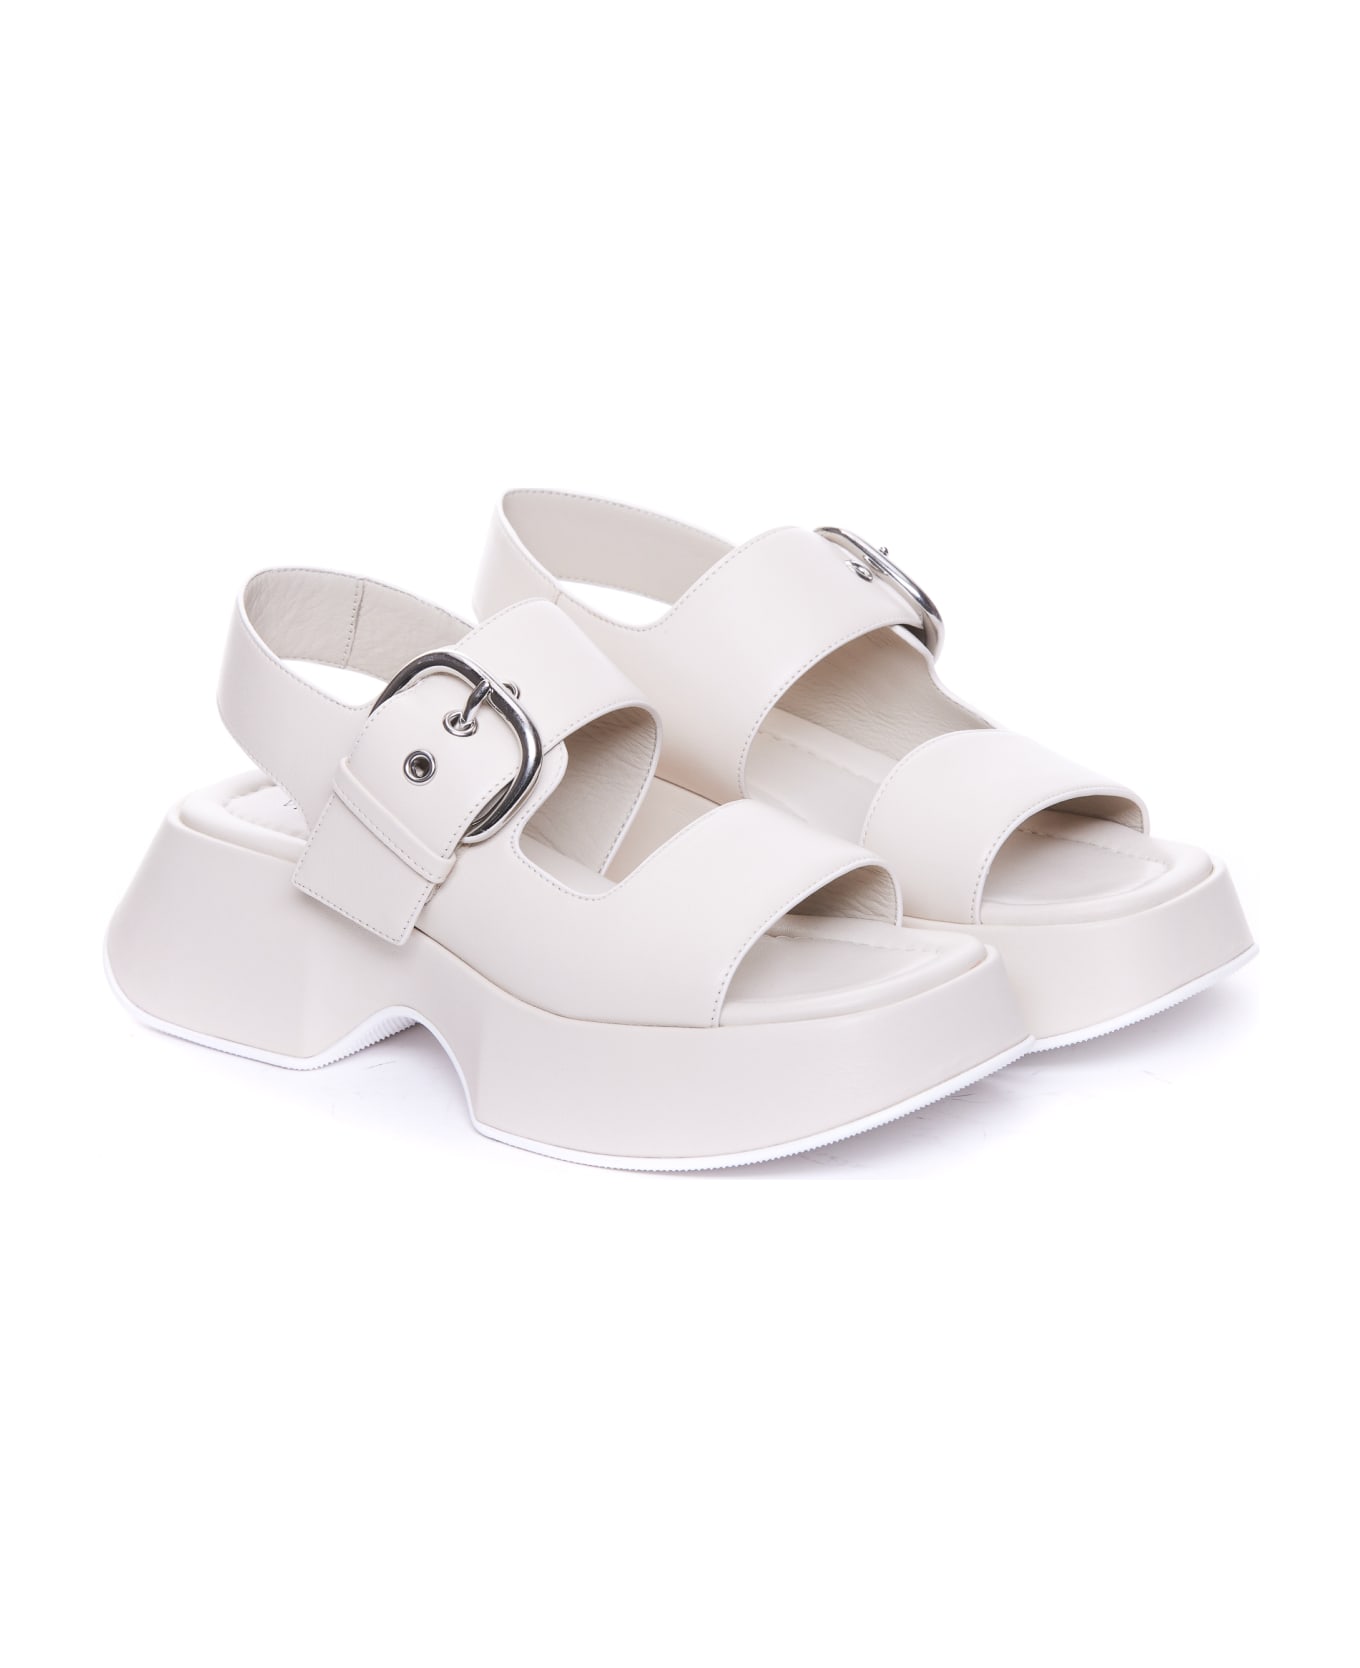 Vic Matié Travel Sandals - White サンダル